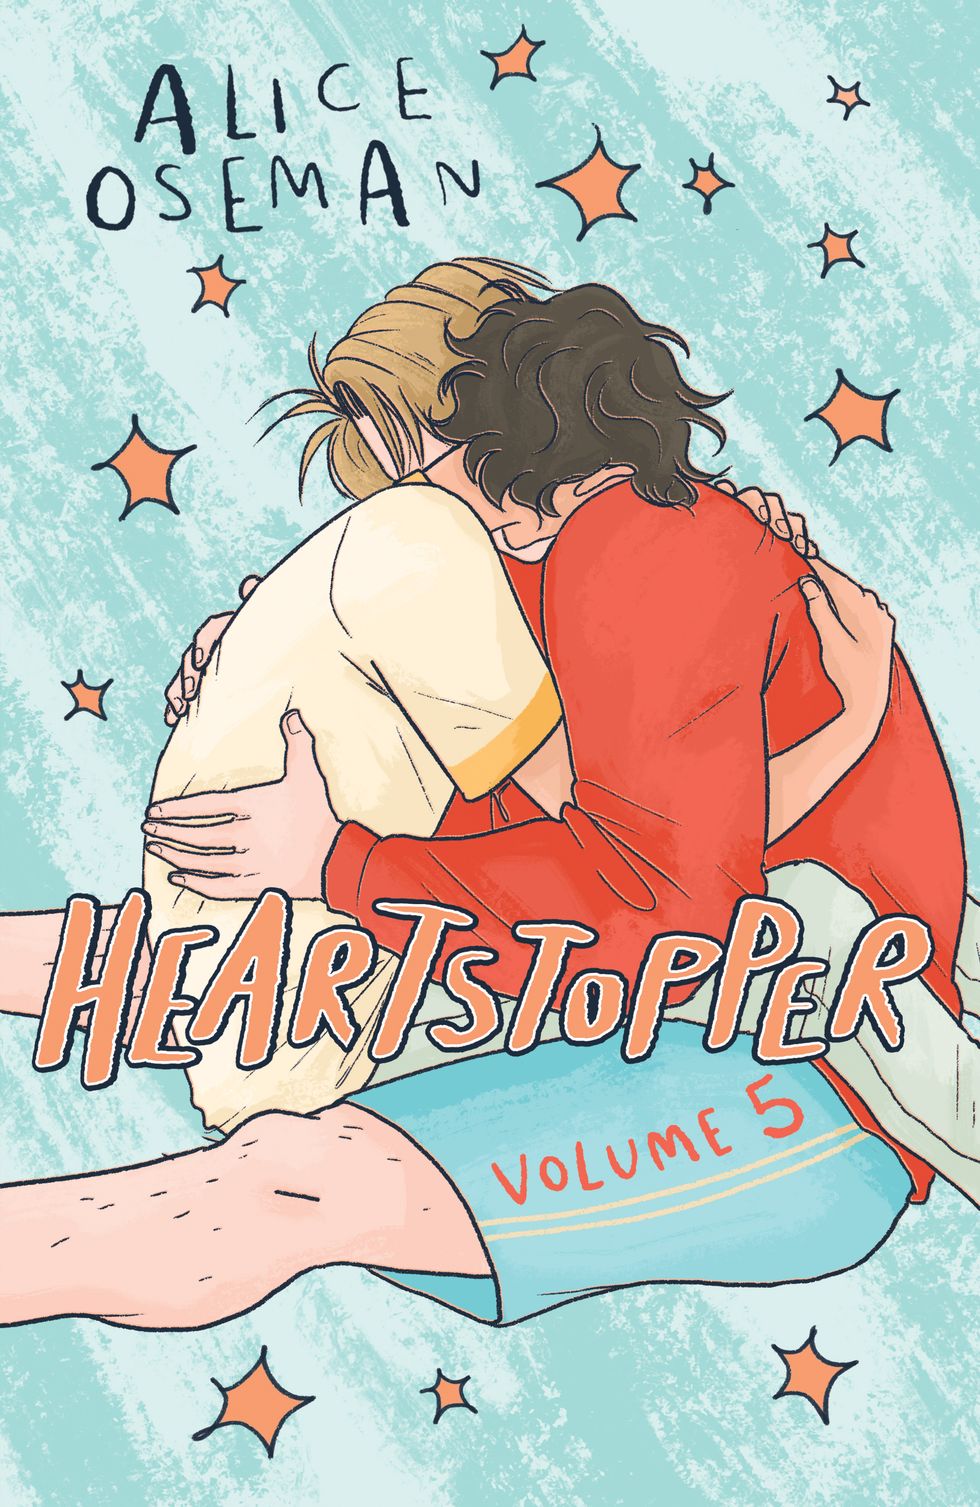 heartstopper volume 5 book